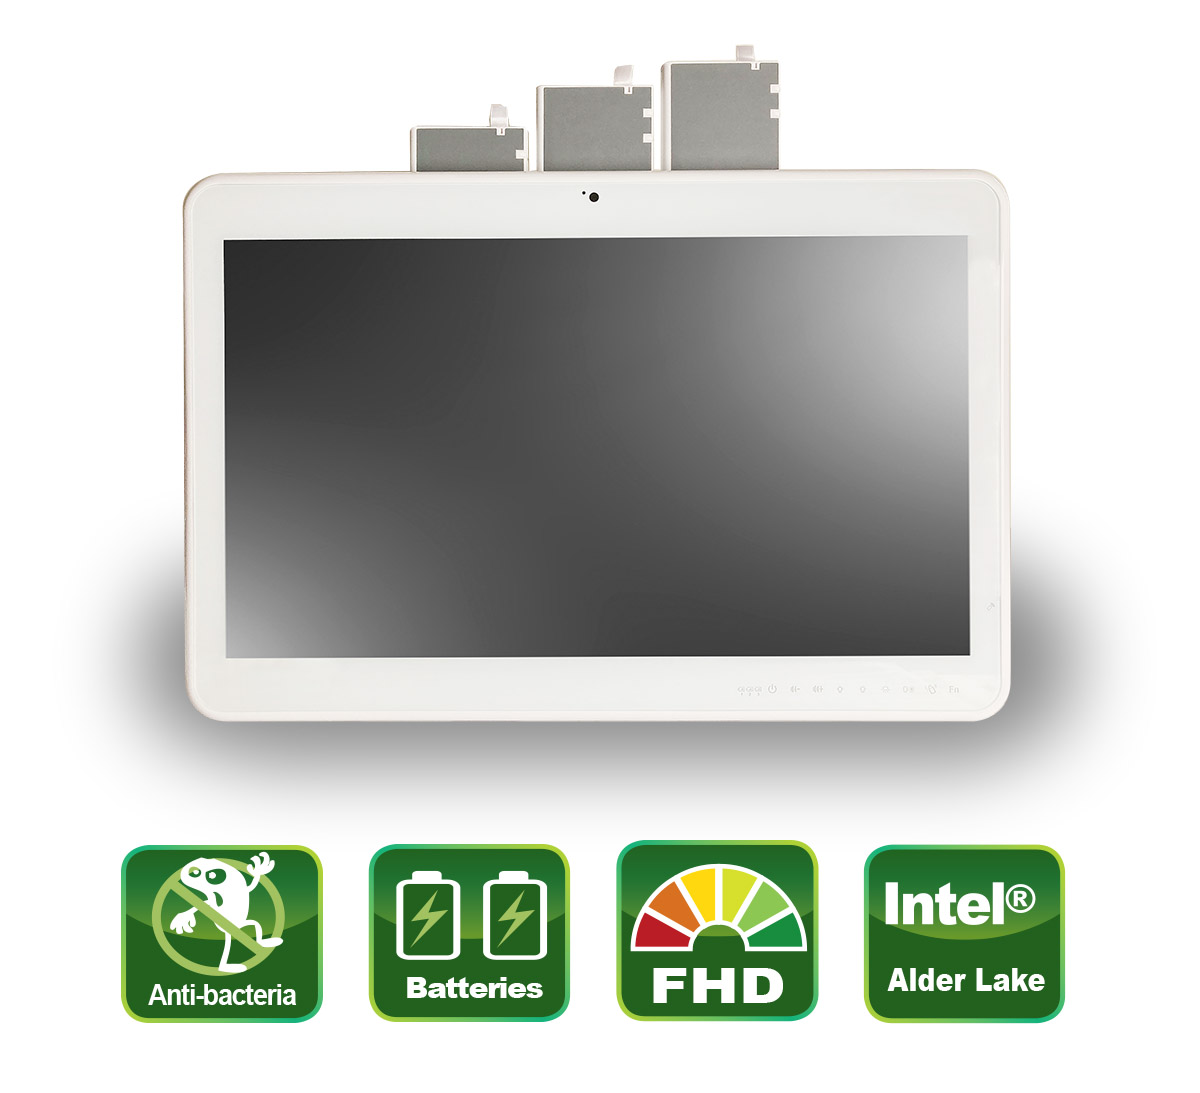 Mobiler Medical All-in-One PC mit Alder Lake CPU